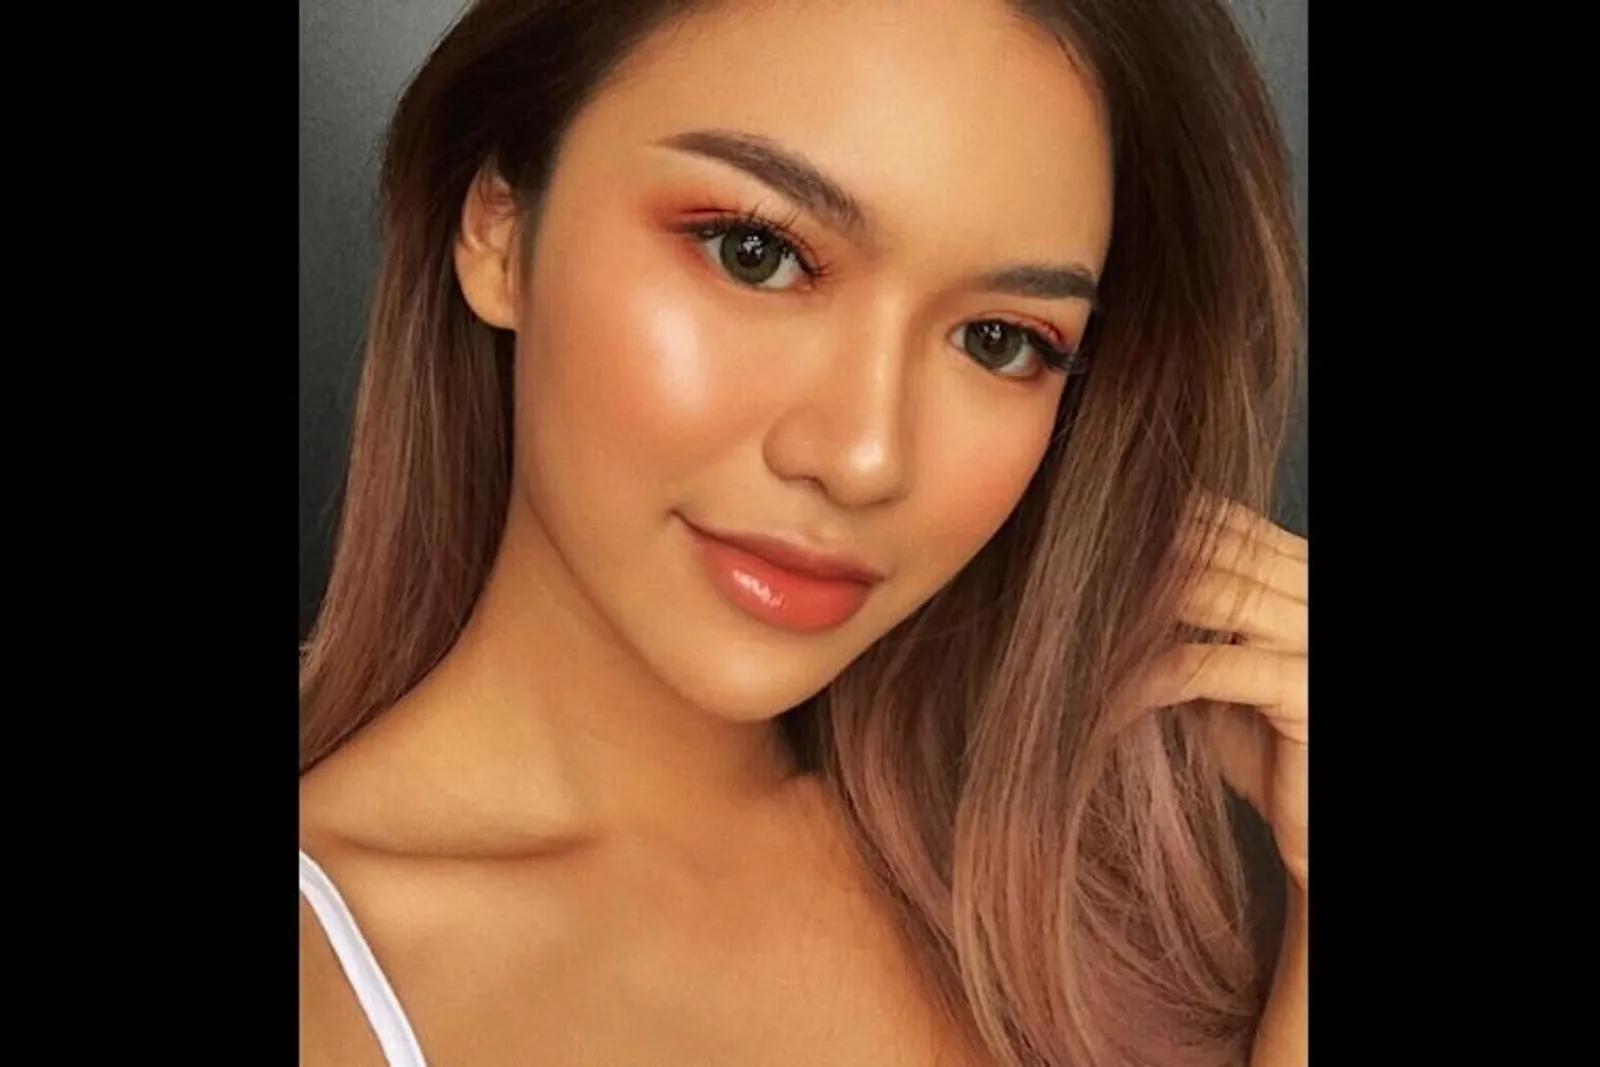 Intip 5 Potret Beauty Vlogger Indonesia yang Memiliki Kulit Eksotis